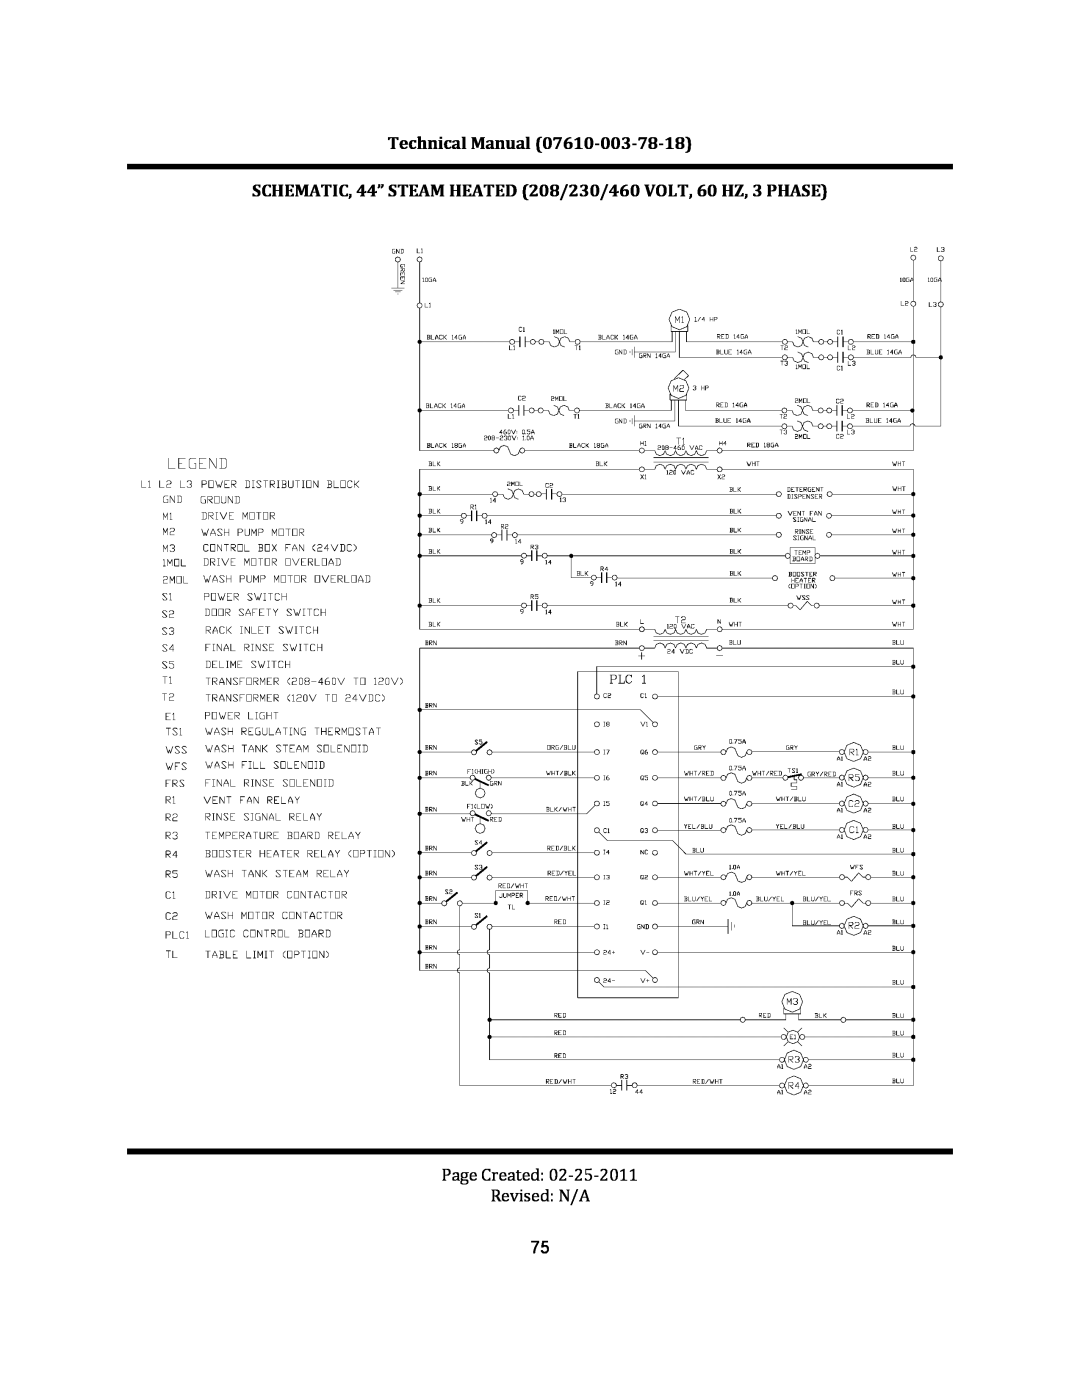 Jackson CREW 66S, CREW 44S Technical Manual 07610‐003‐78‐18, SCHEMATIC, 44” STEAM HEATED 208/230/460 VOLT, 60 HZ, 3 PHASE 